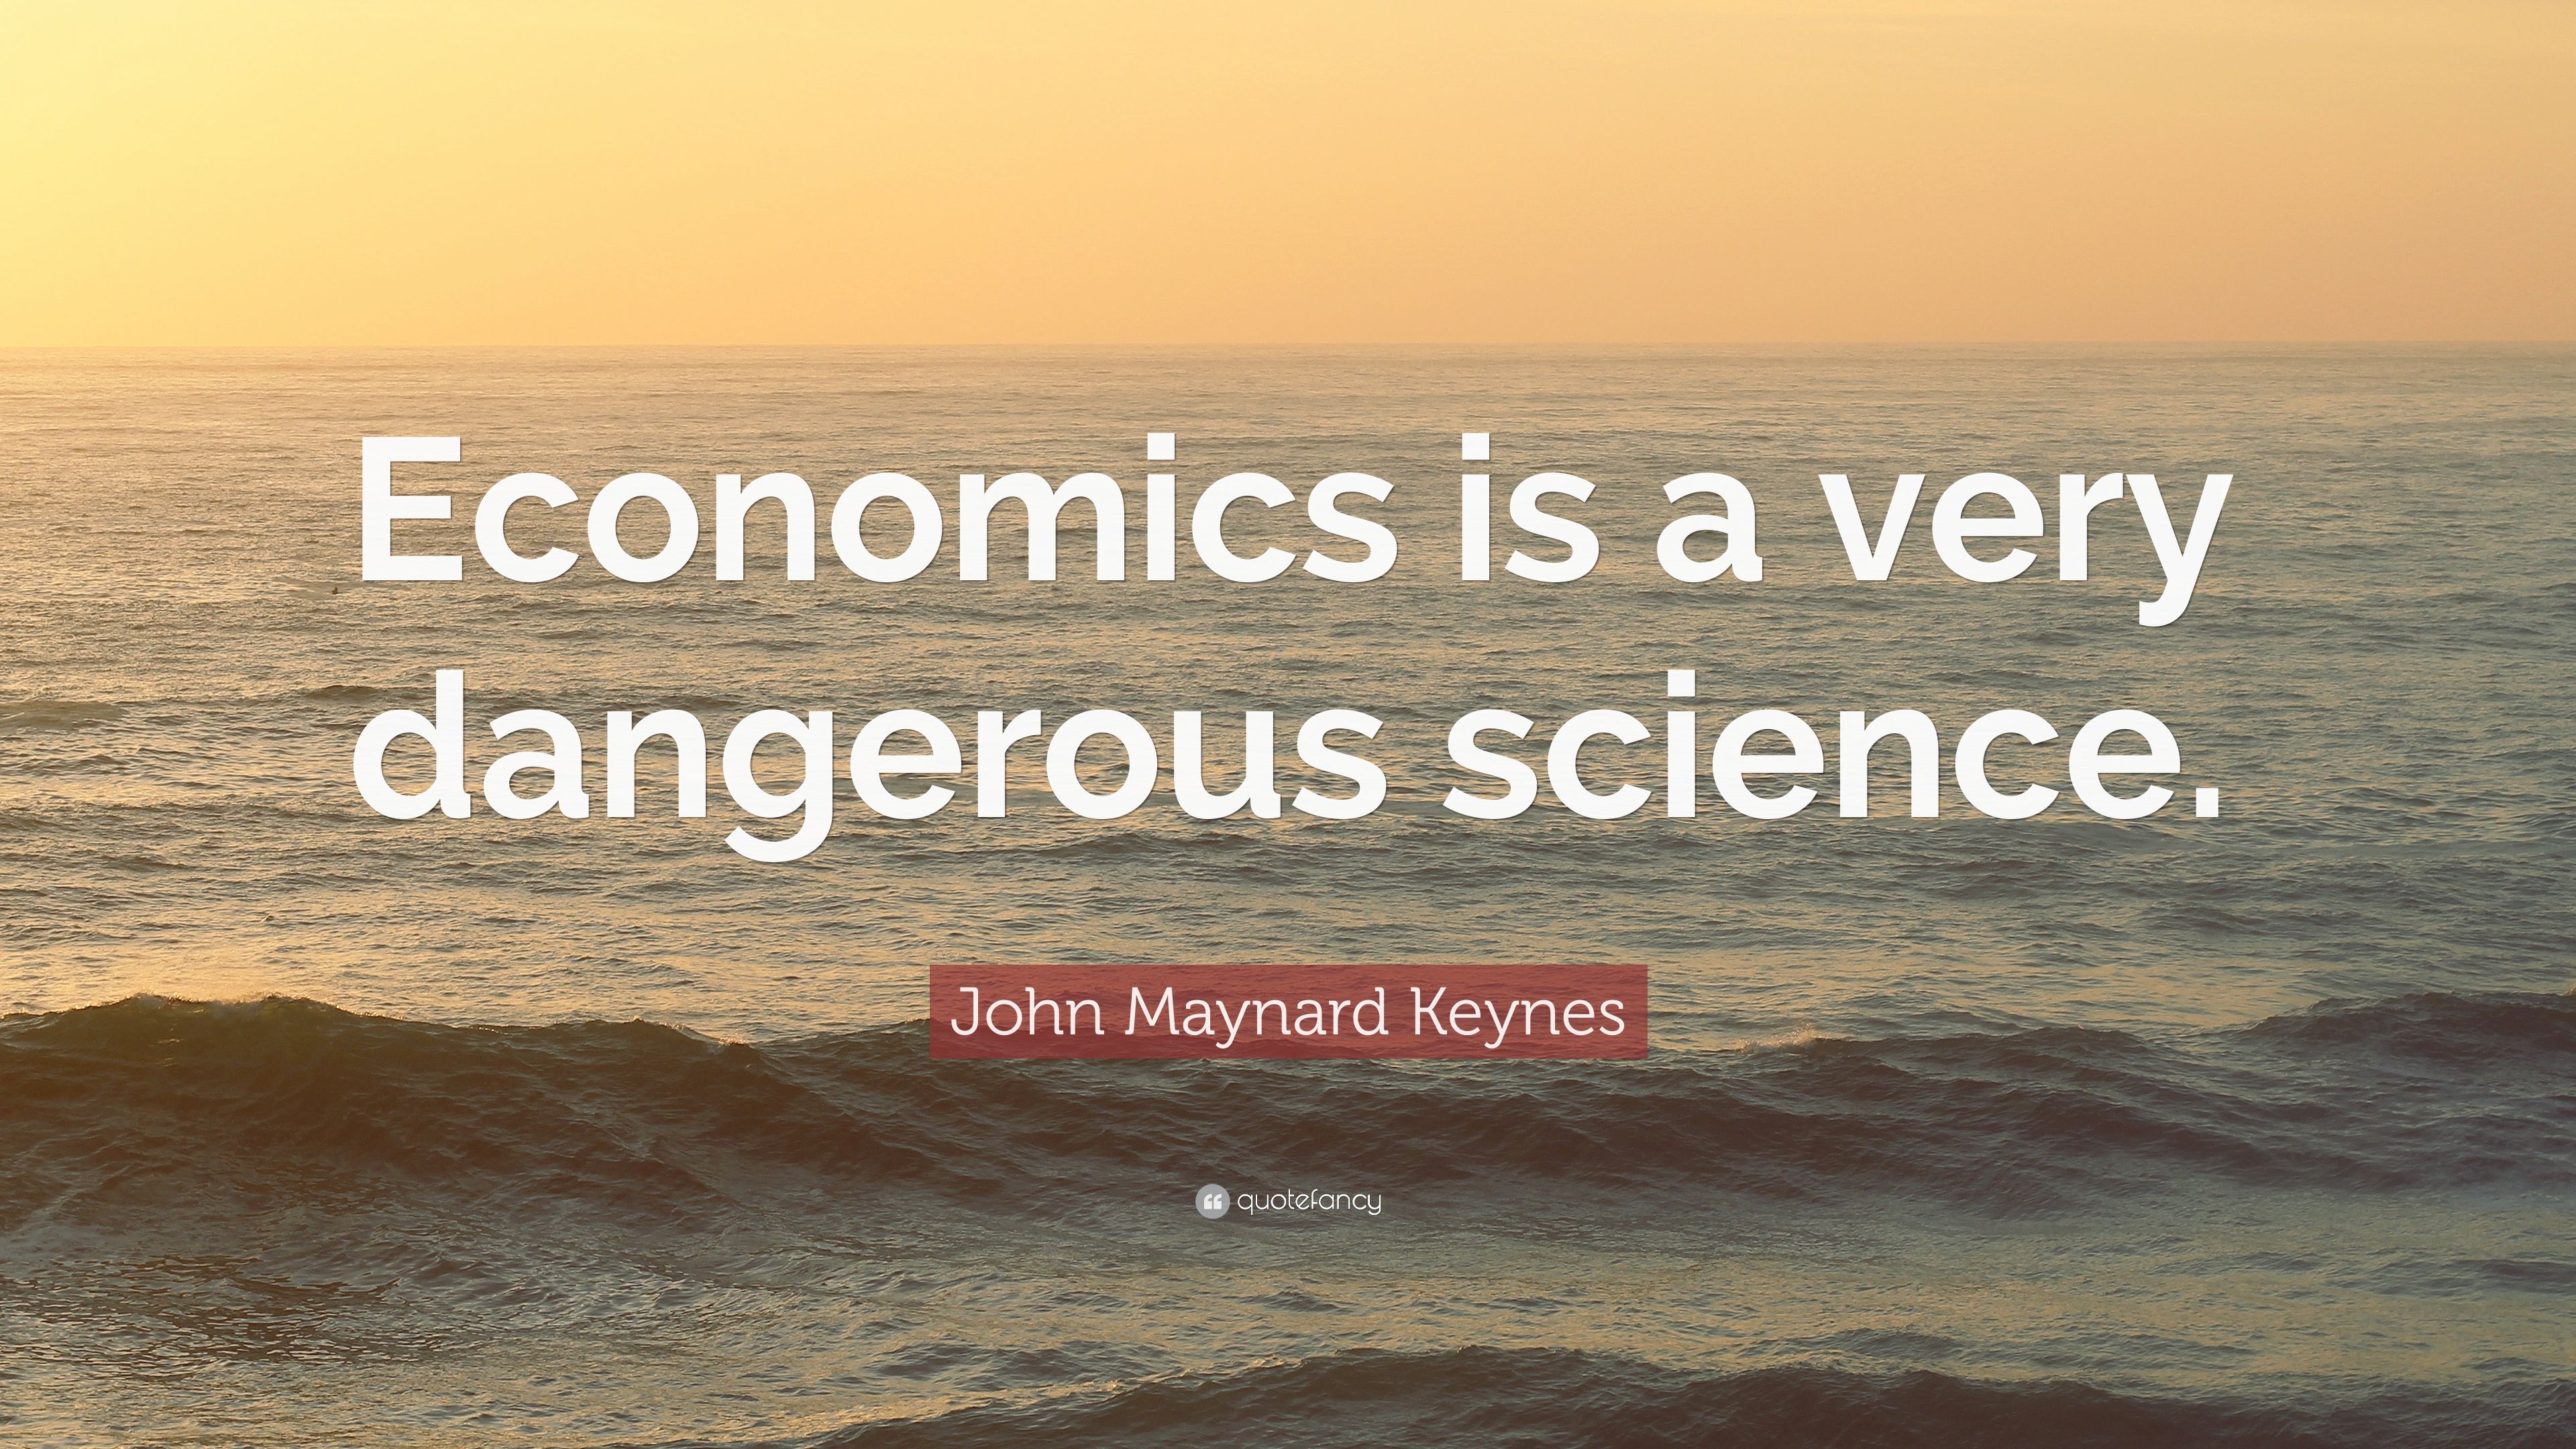 John Maynard Keynes Quote: “Economics is a very dangerous science